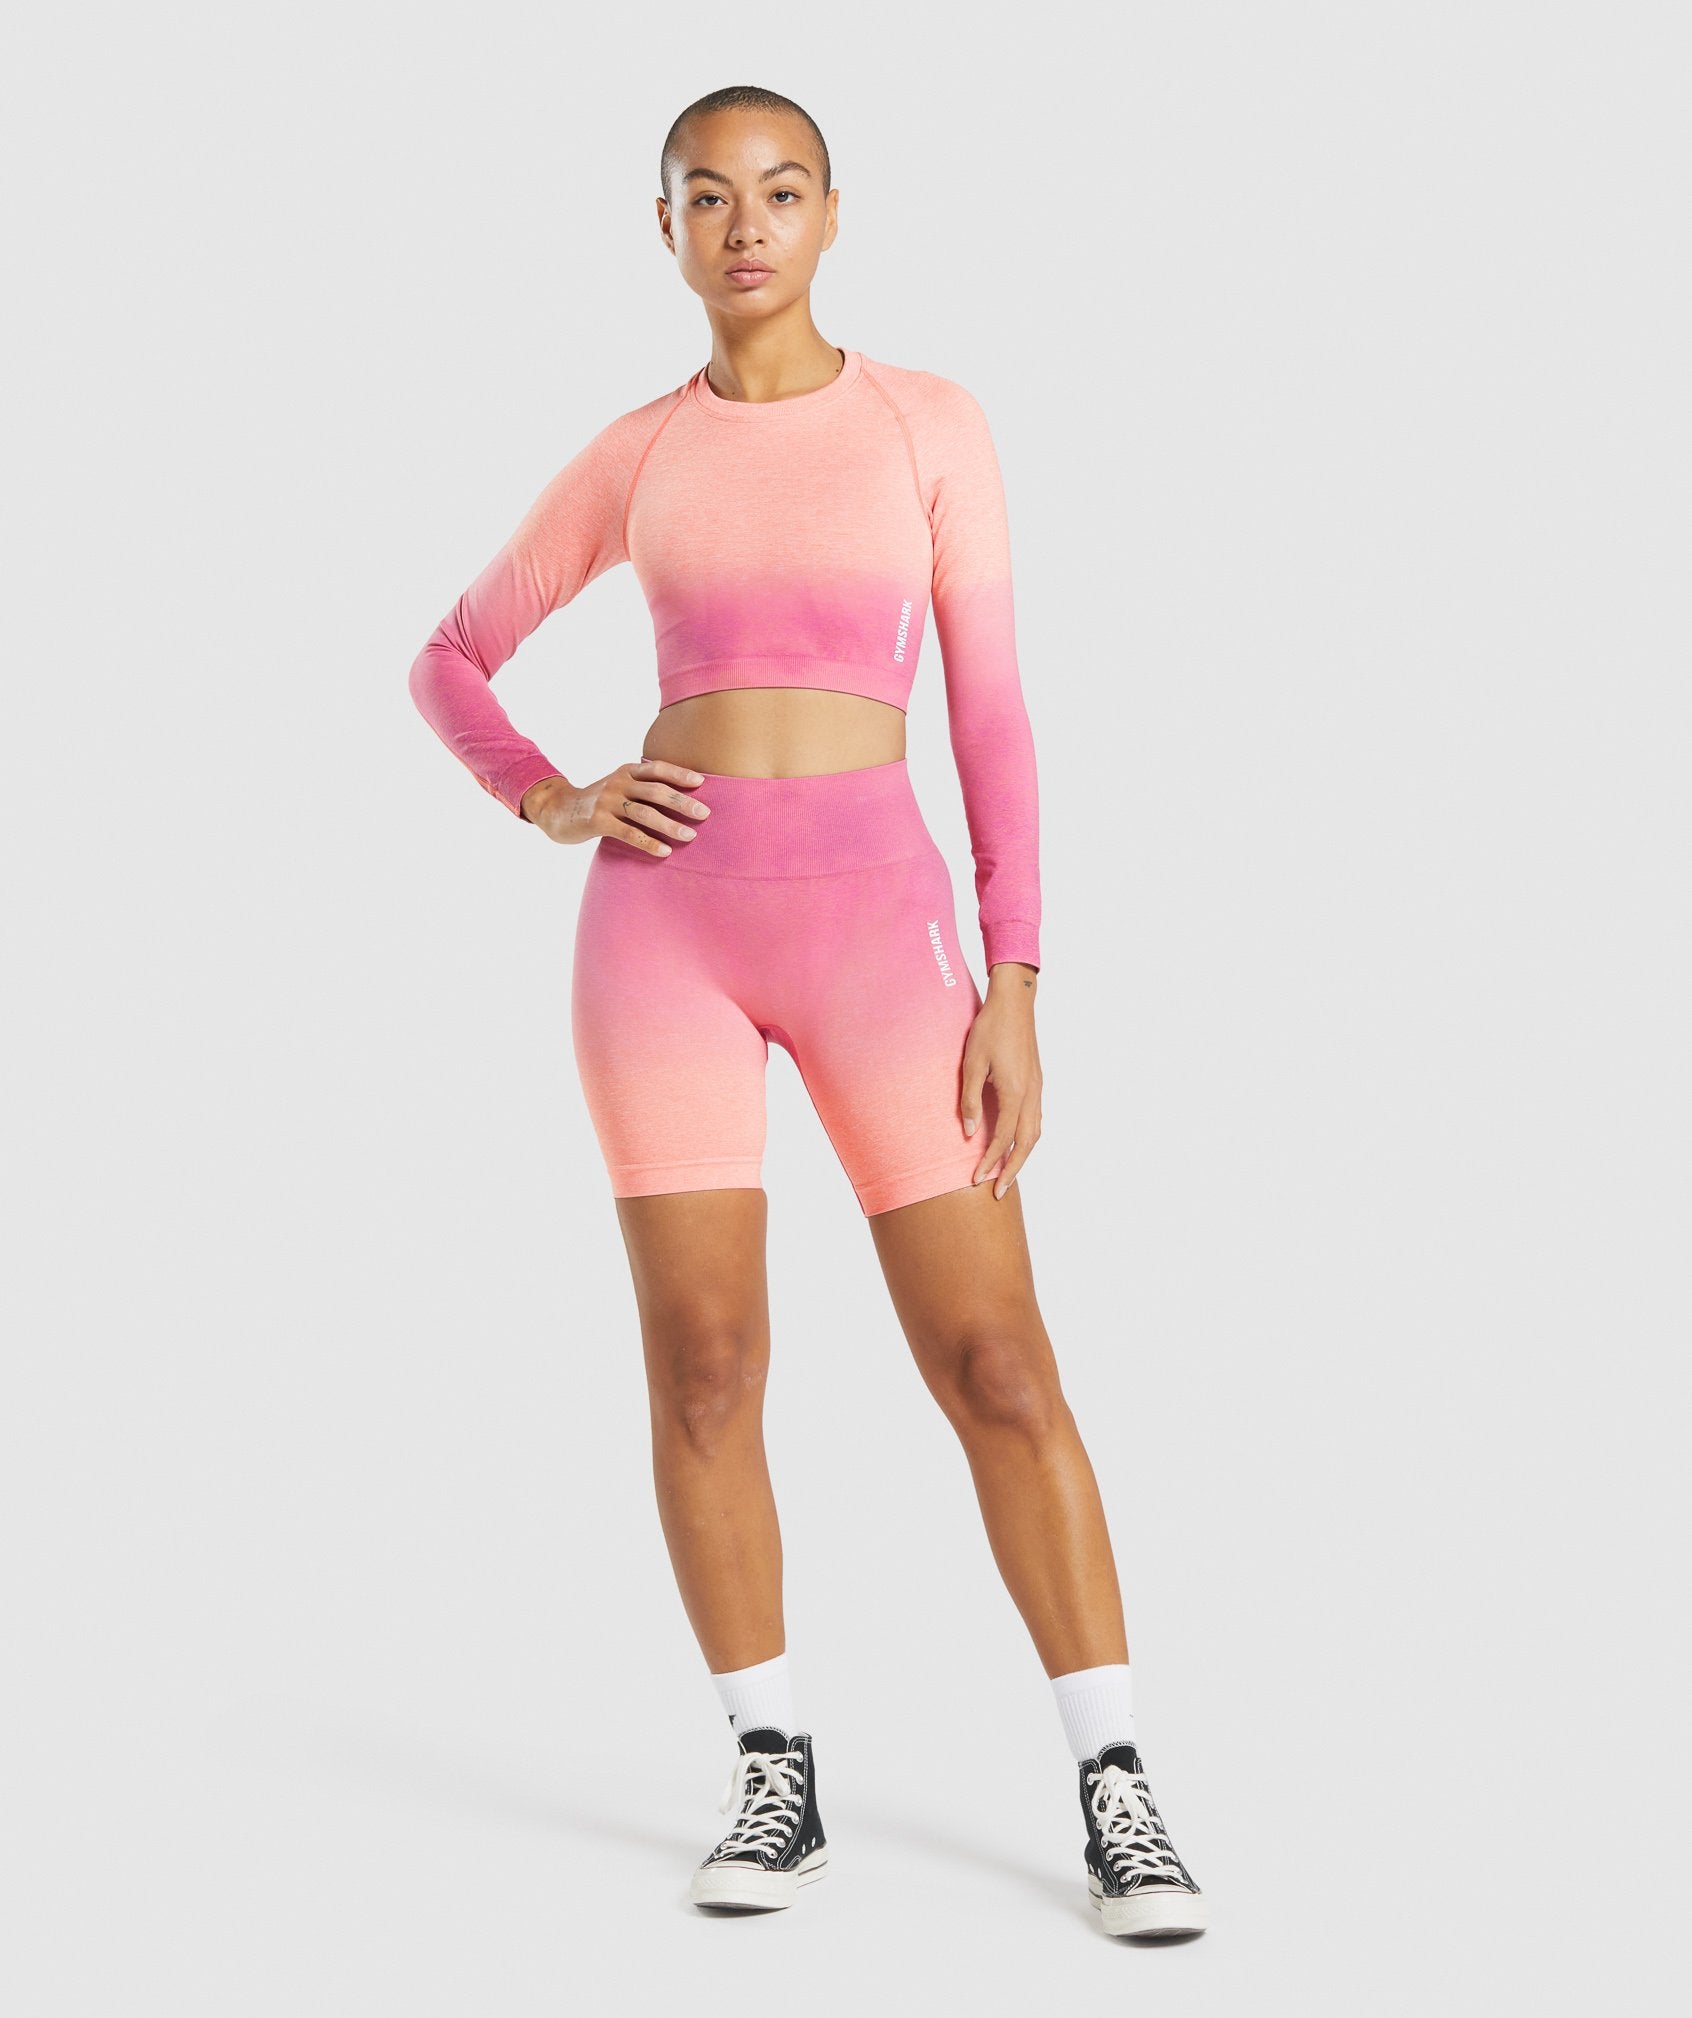 Gymshark Adapt Ombre Seamless Shorts Women's Small NWOT - Orange Marl/Pink